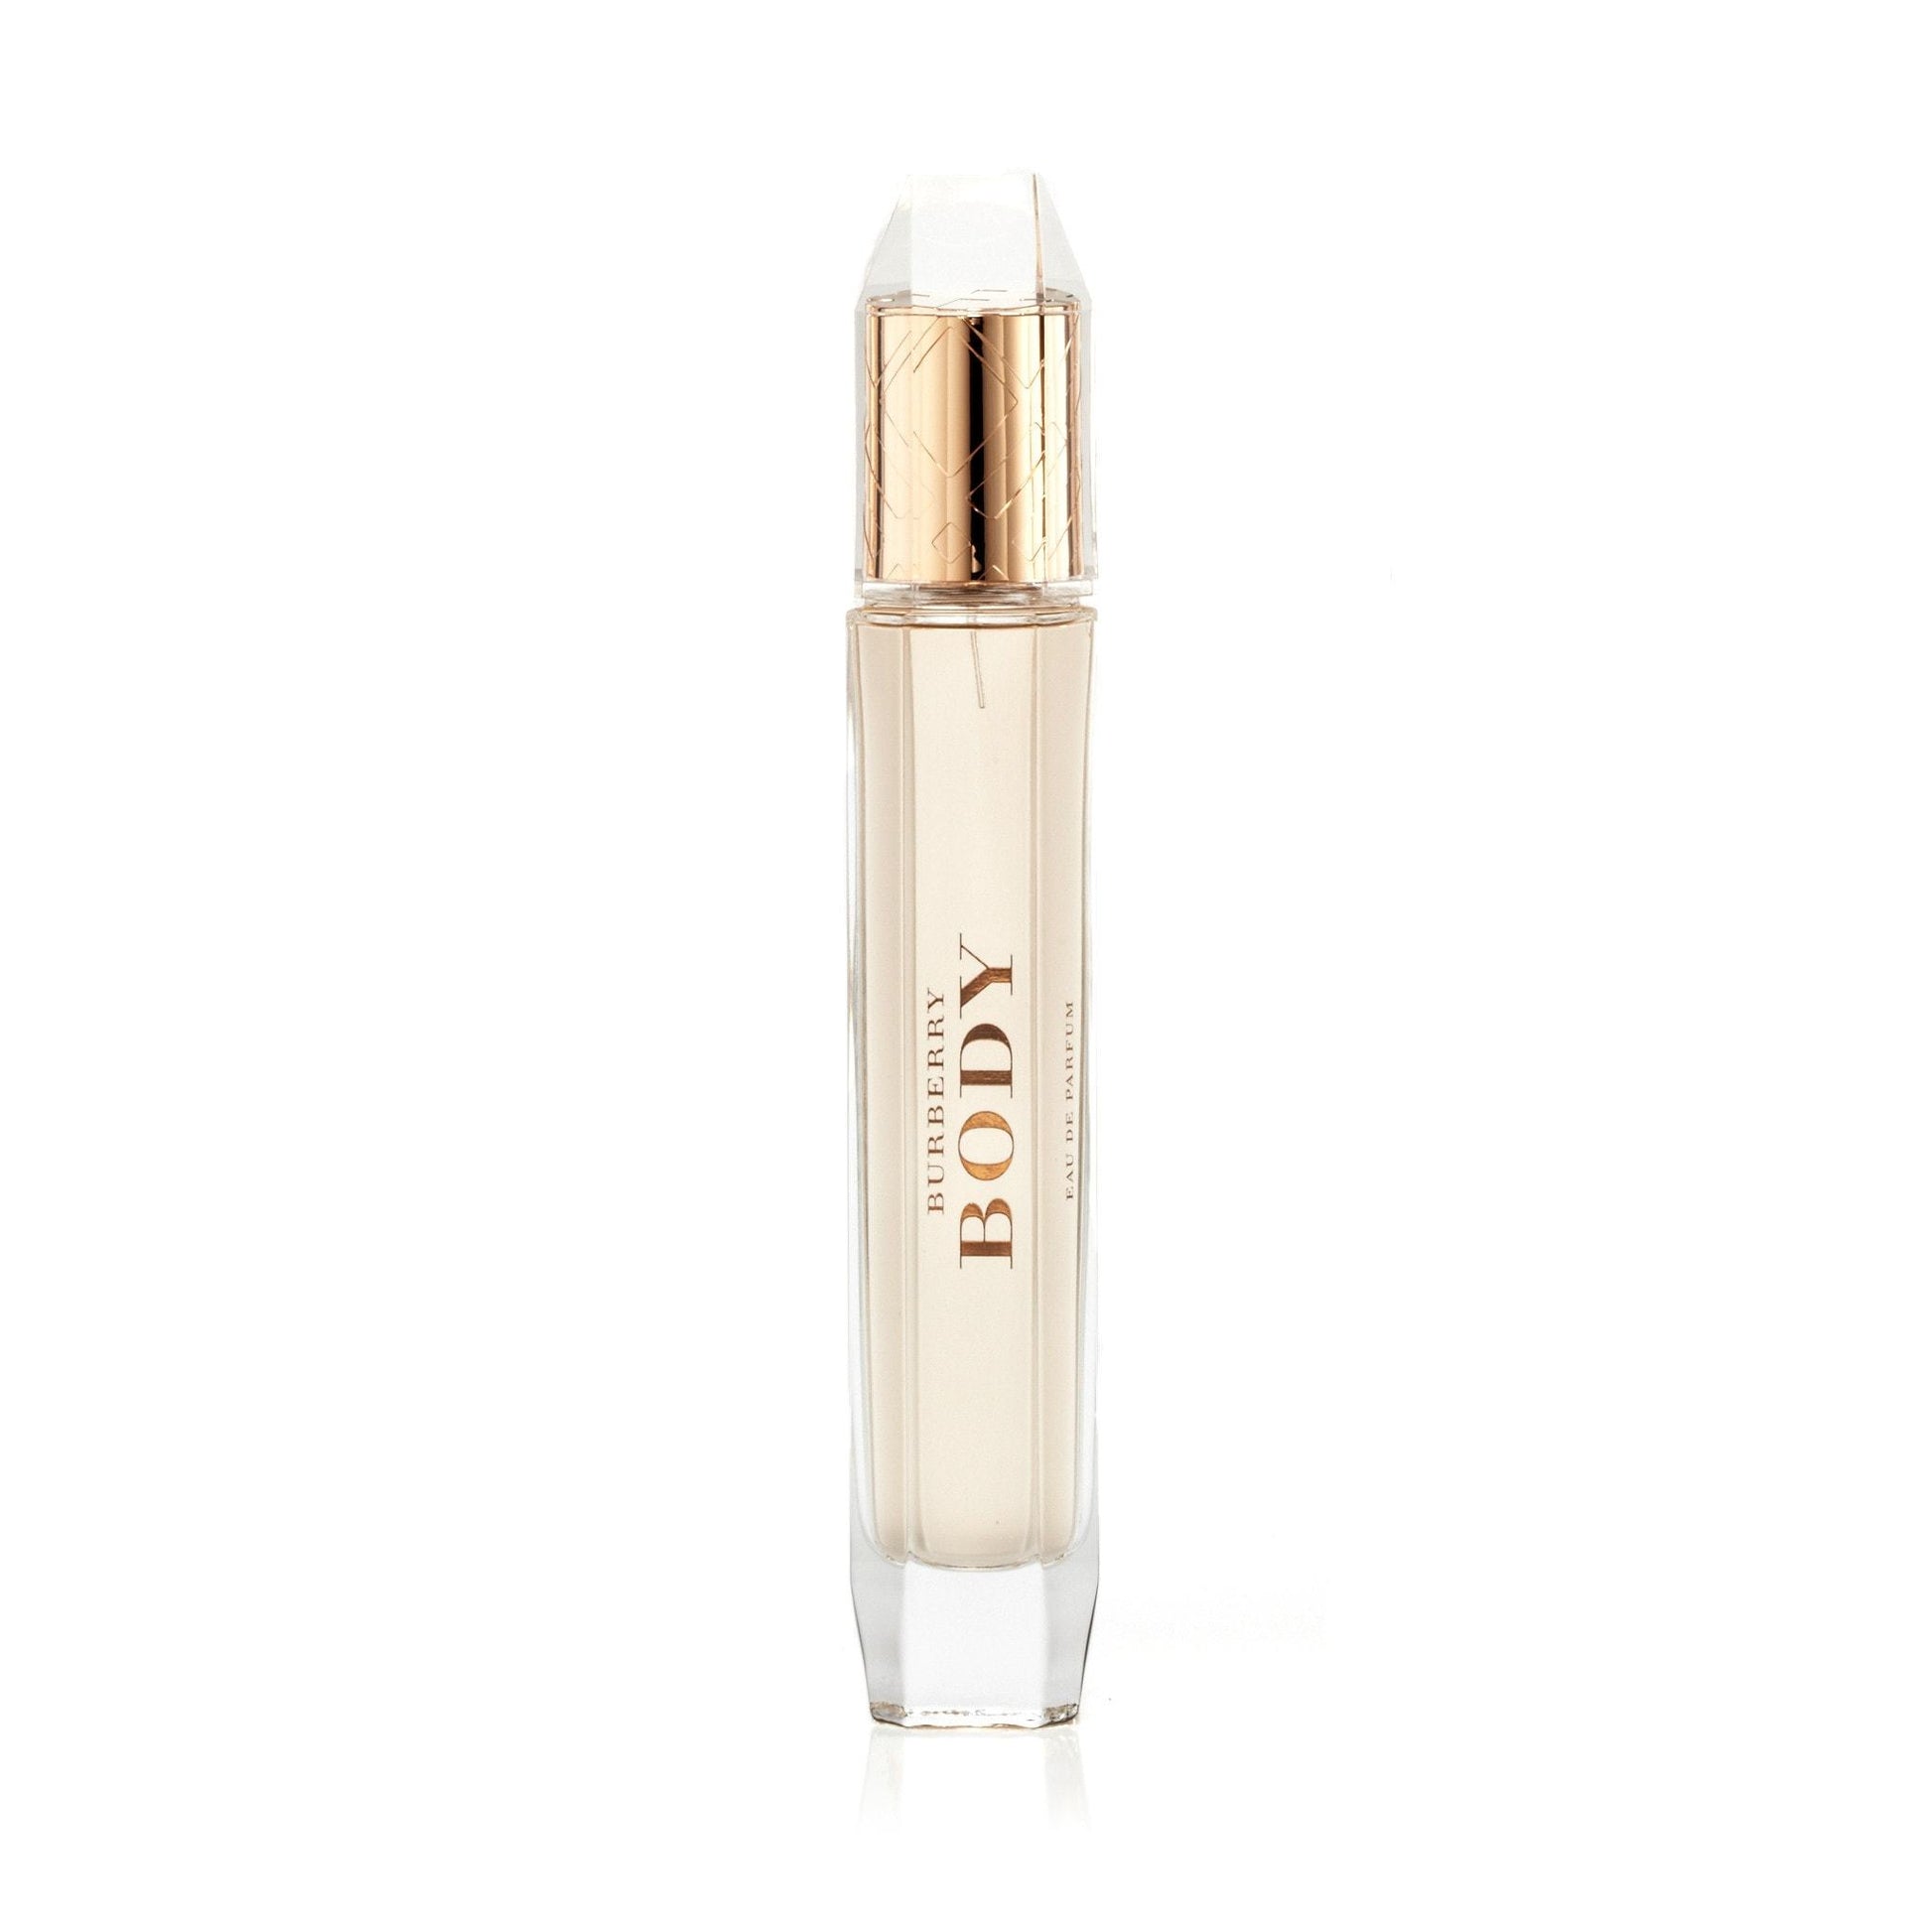 Body Eau de Parfum Spray for Women by Burberry, Product image 2